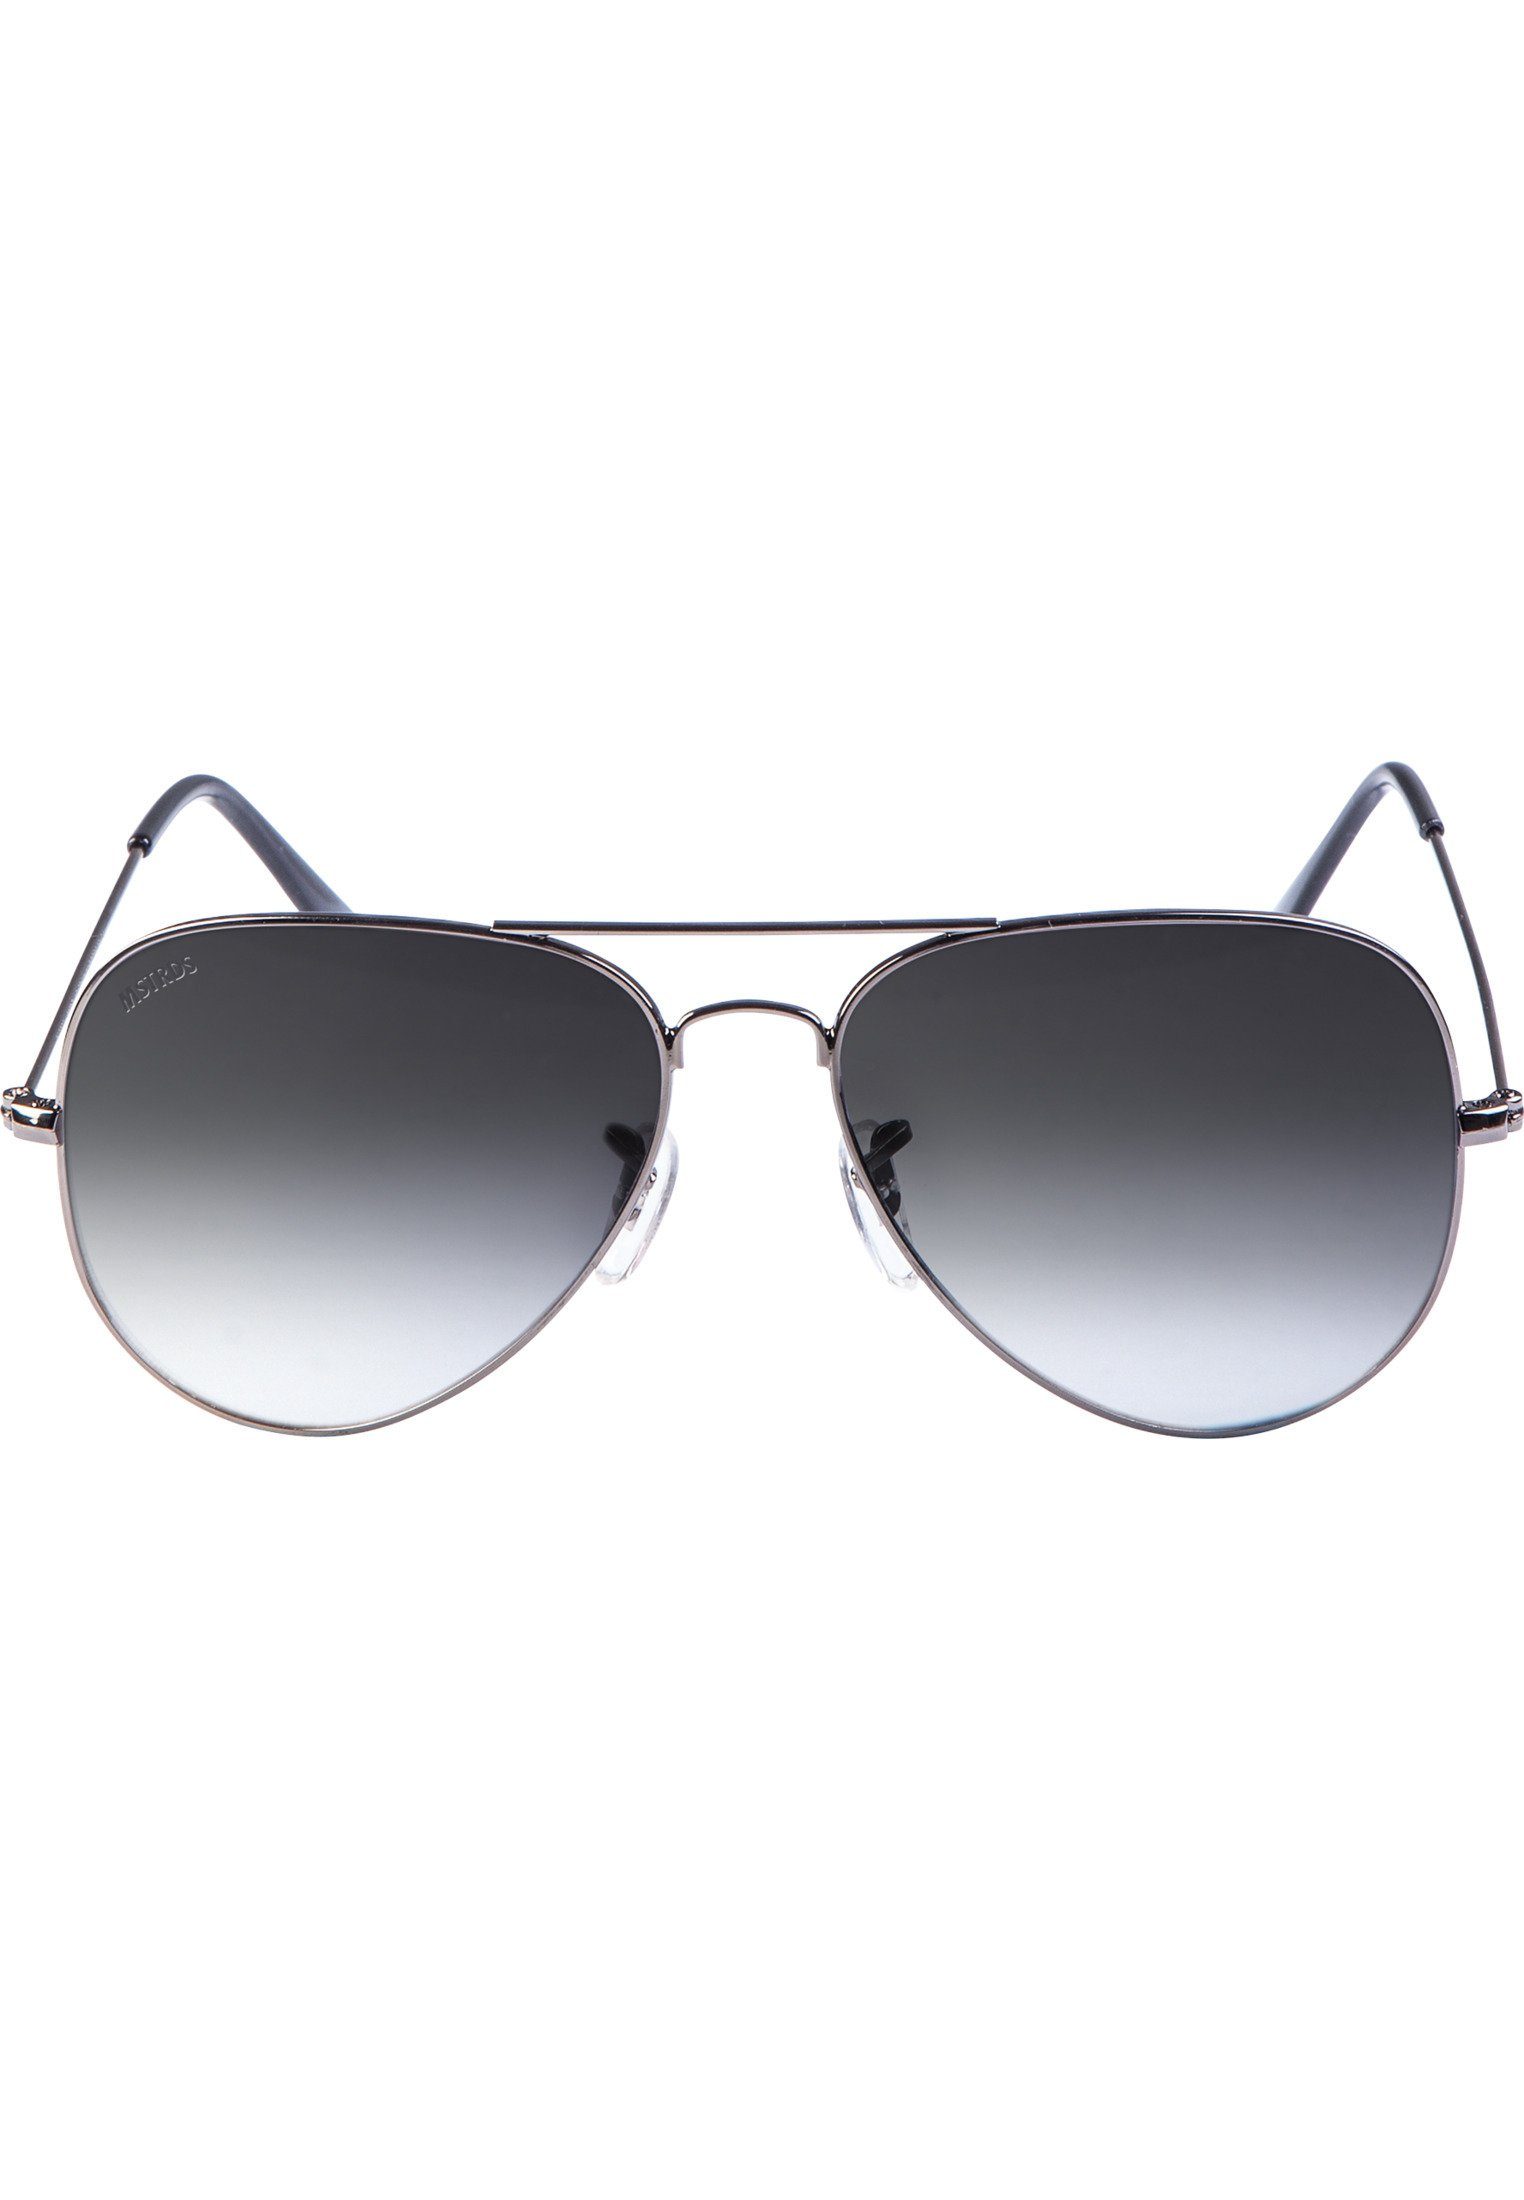 Fördermittelgeber MSTRDS Sonnenbrille Accessoires gun/grey Youth PureAv Sunglasses